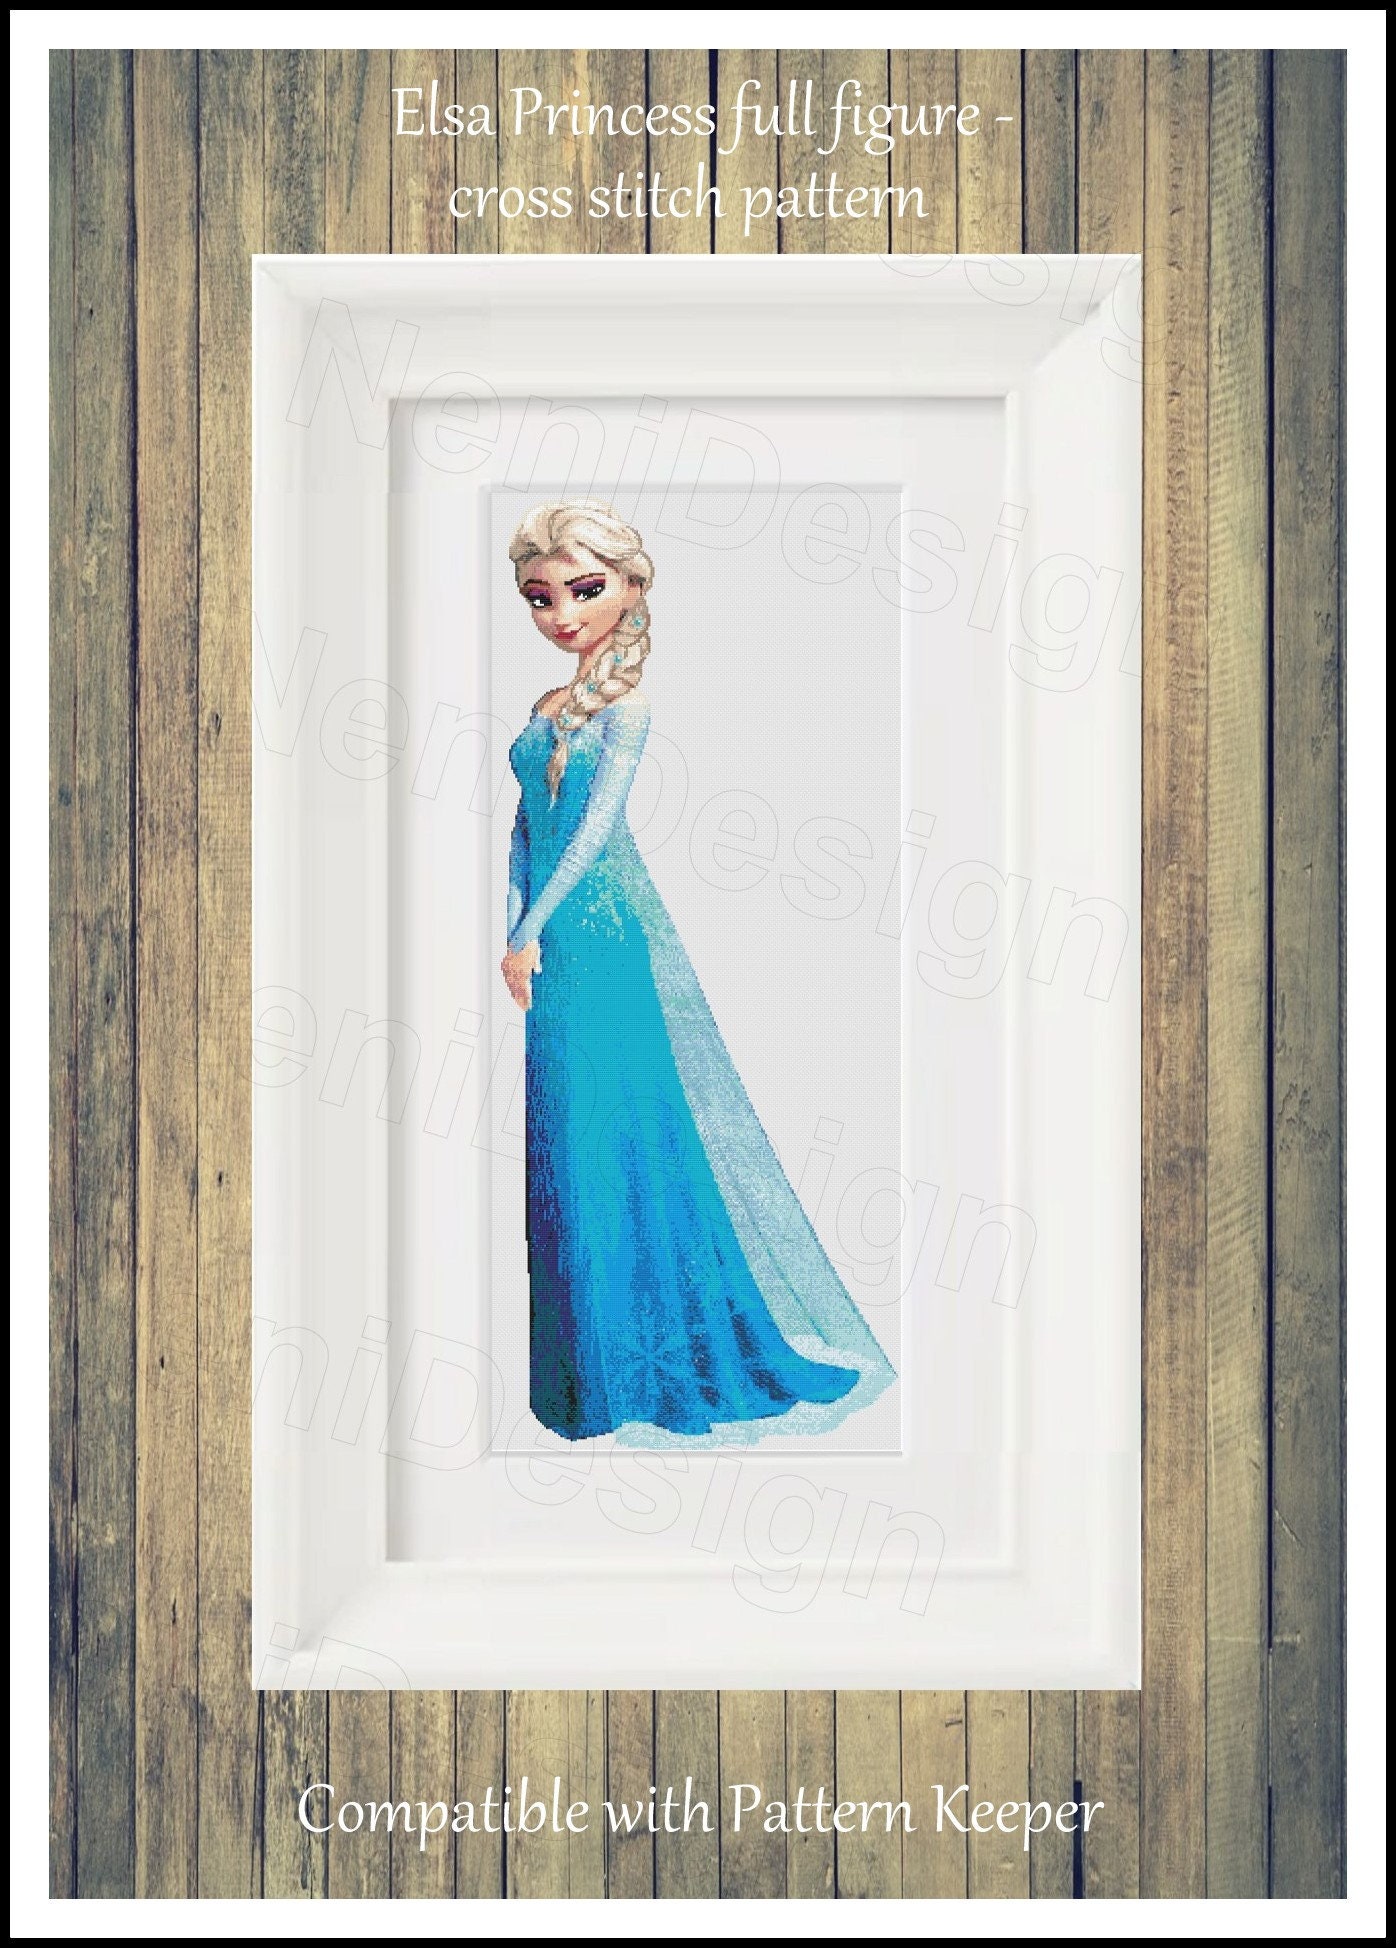 Elsa Pillowcase, Personalized Frozen Pillow, Custom Disney Gift, Frozen  Themed Room, Personalized Elsa Pillowcase, Elsa Pillow Cover 